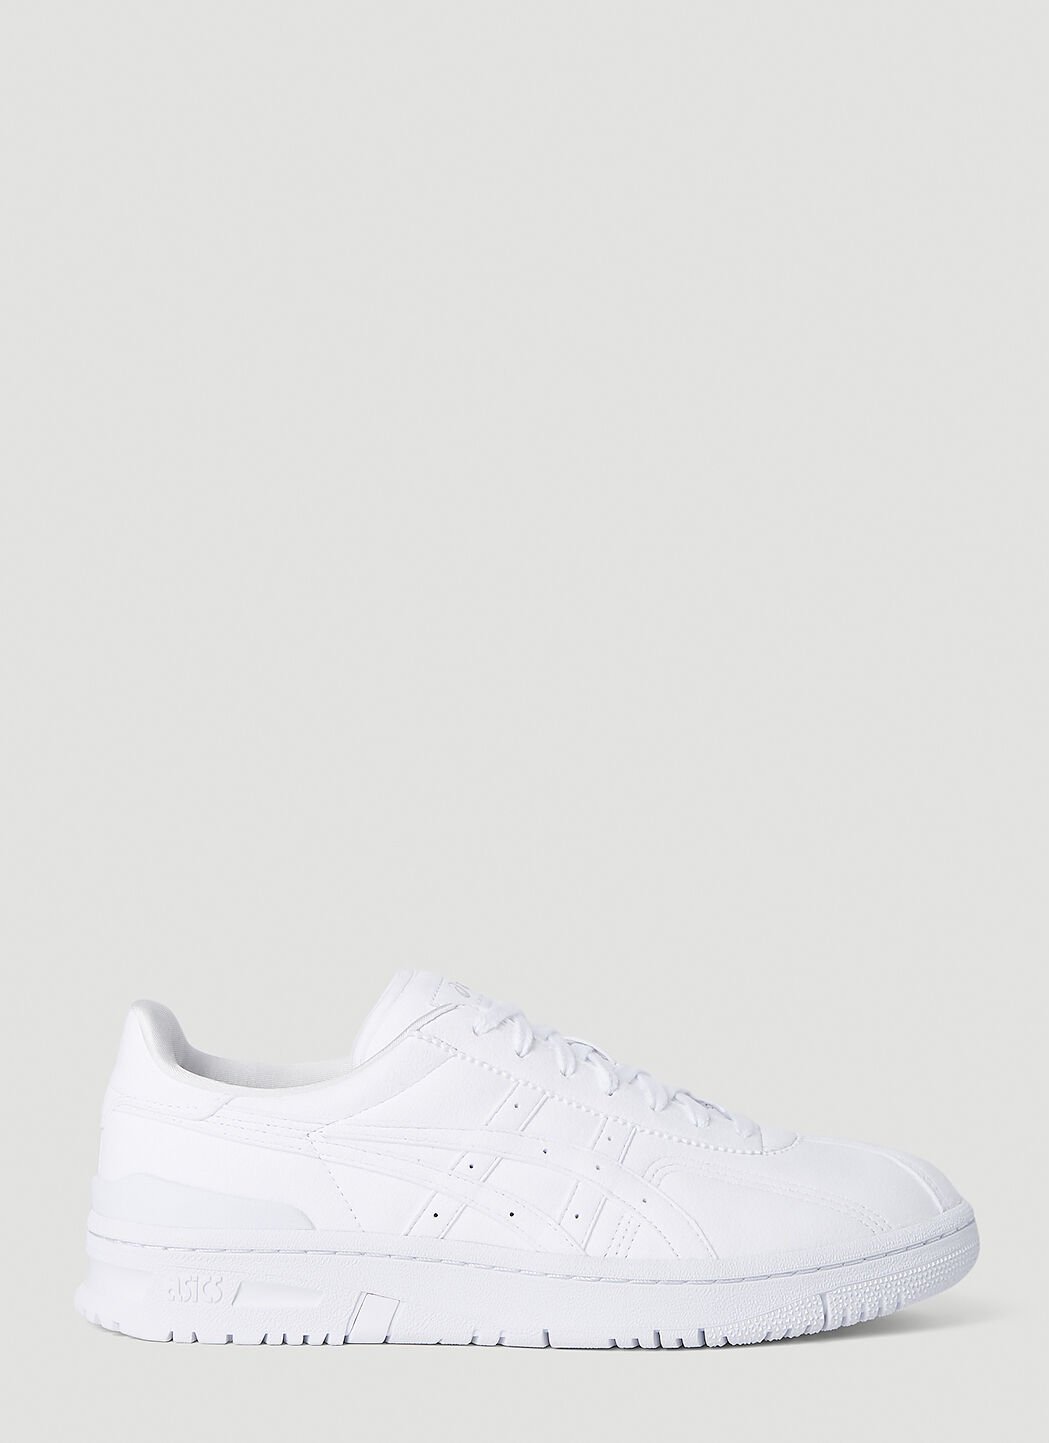 Comme des Garçons SHIRT x Asics Sneakers White cdg0156007